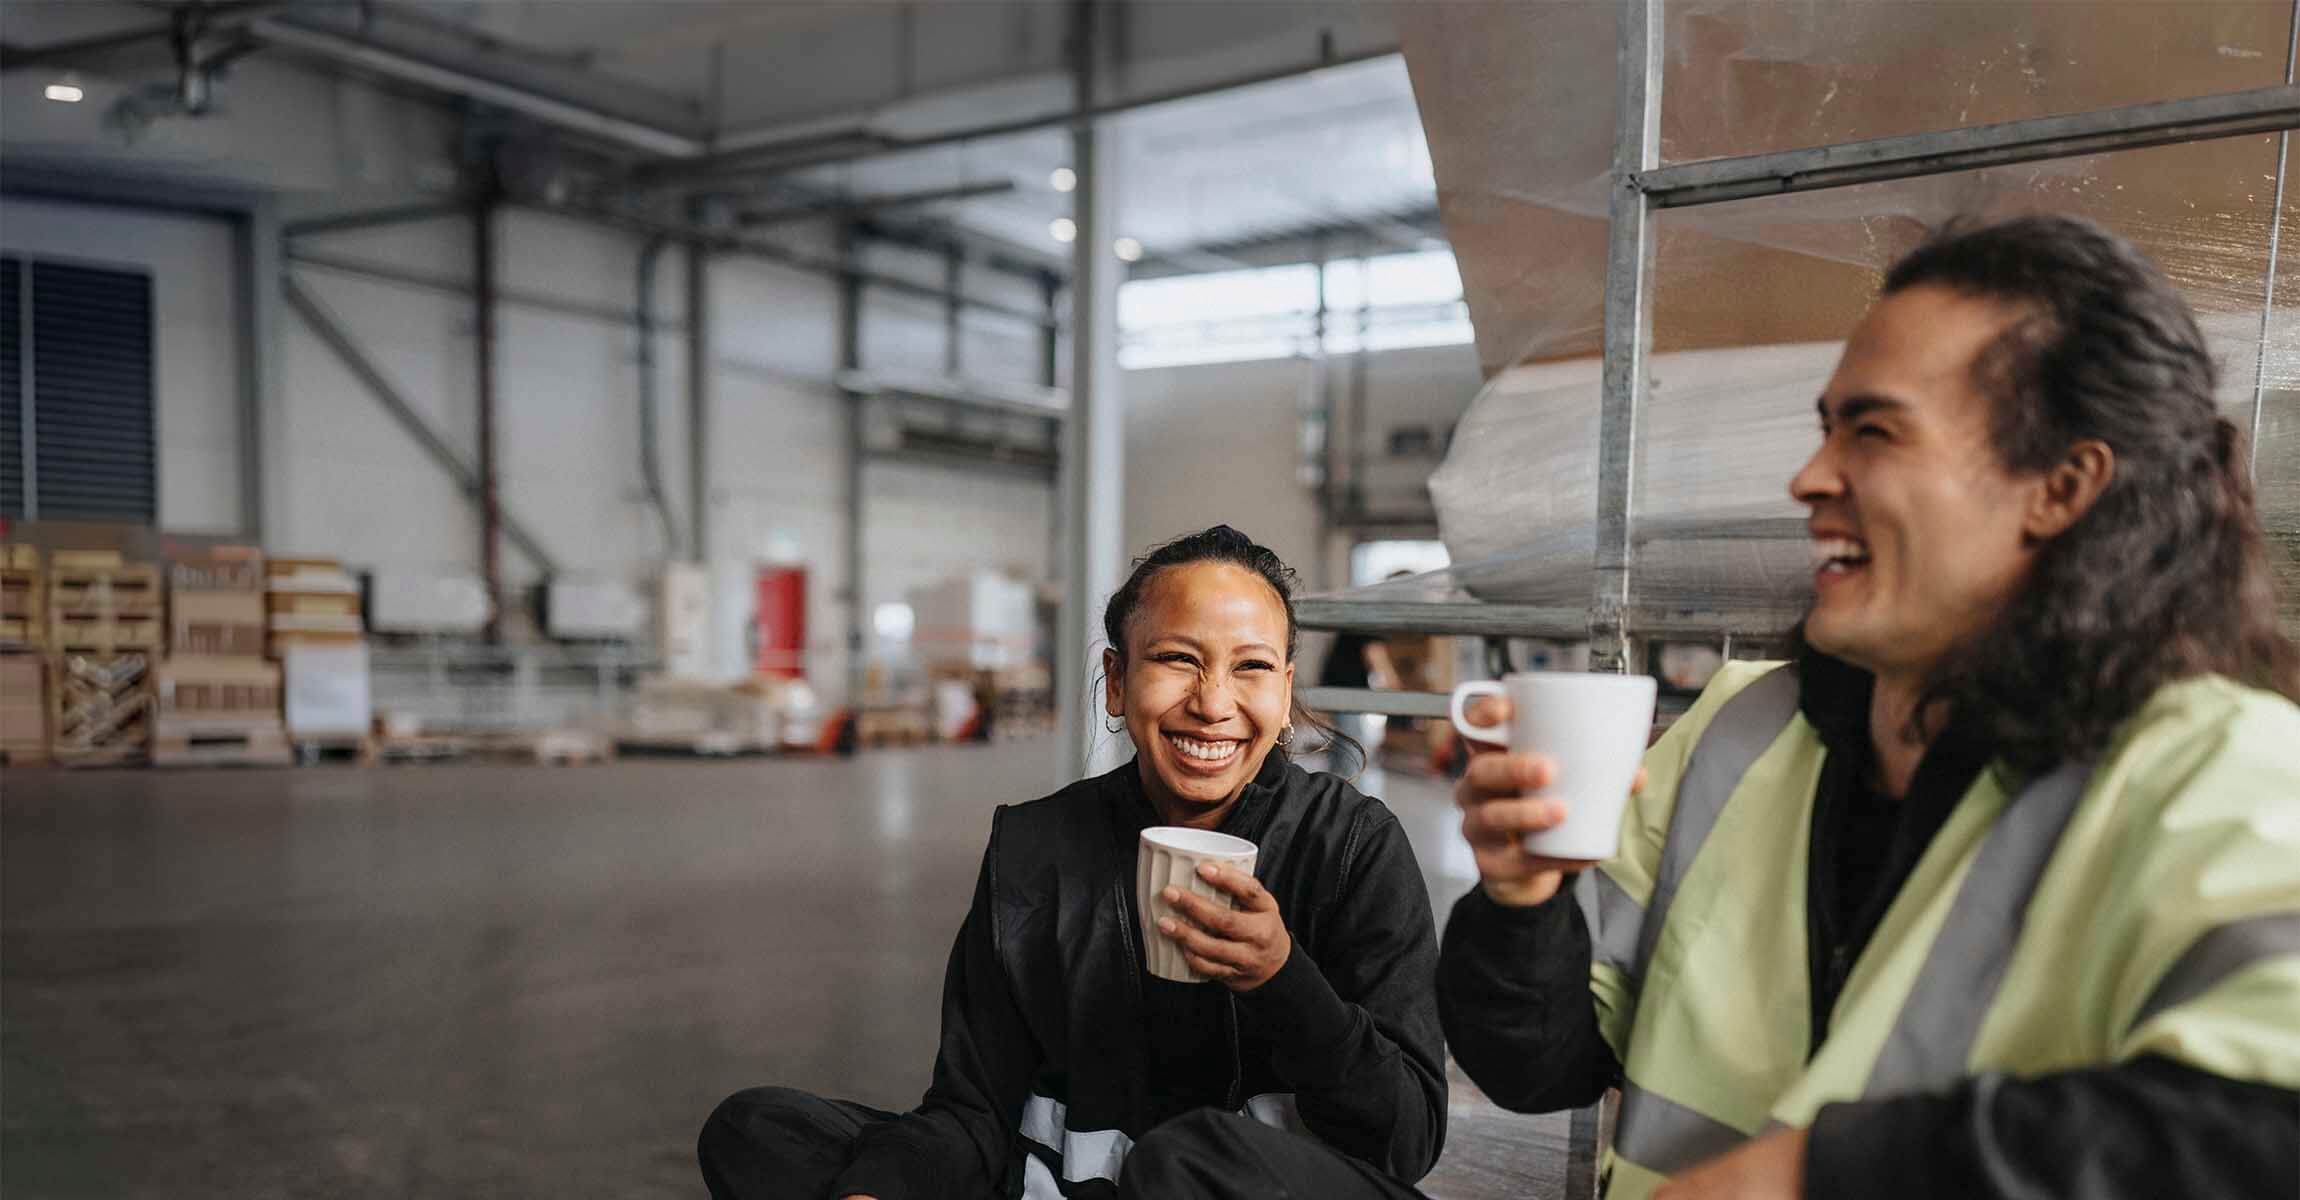 Workers enjoying a coffee on their break